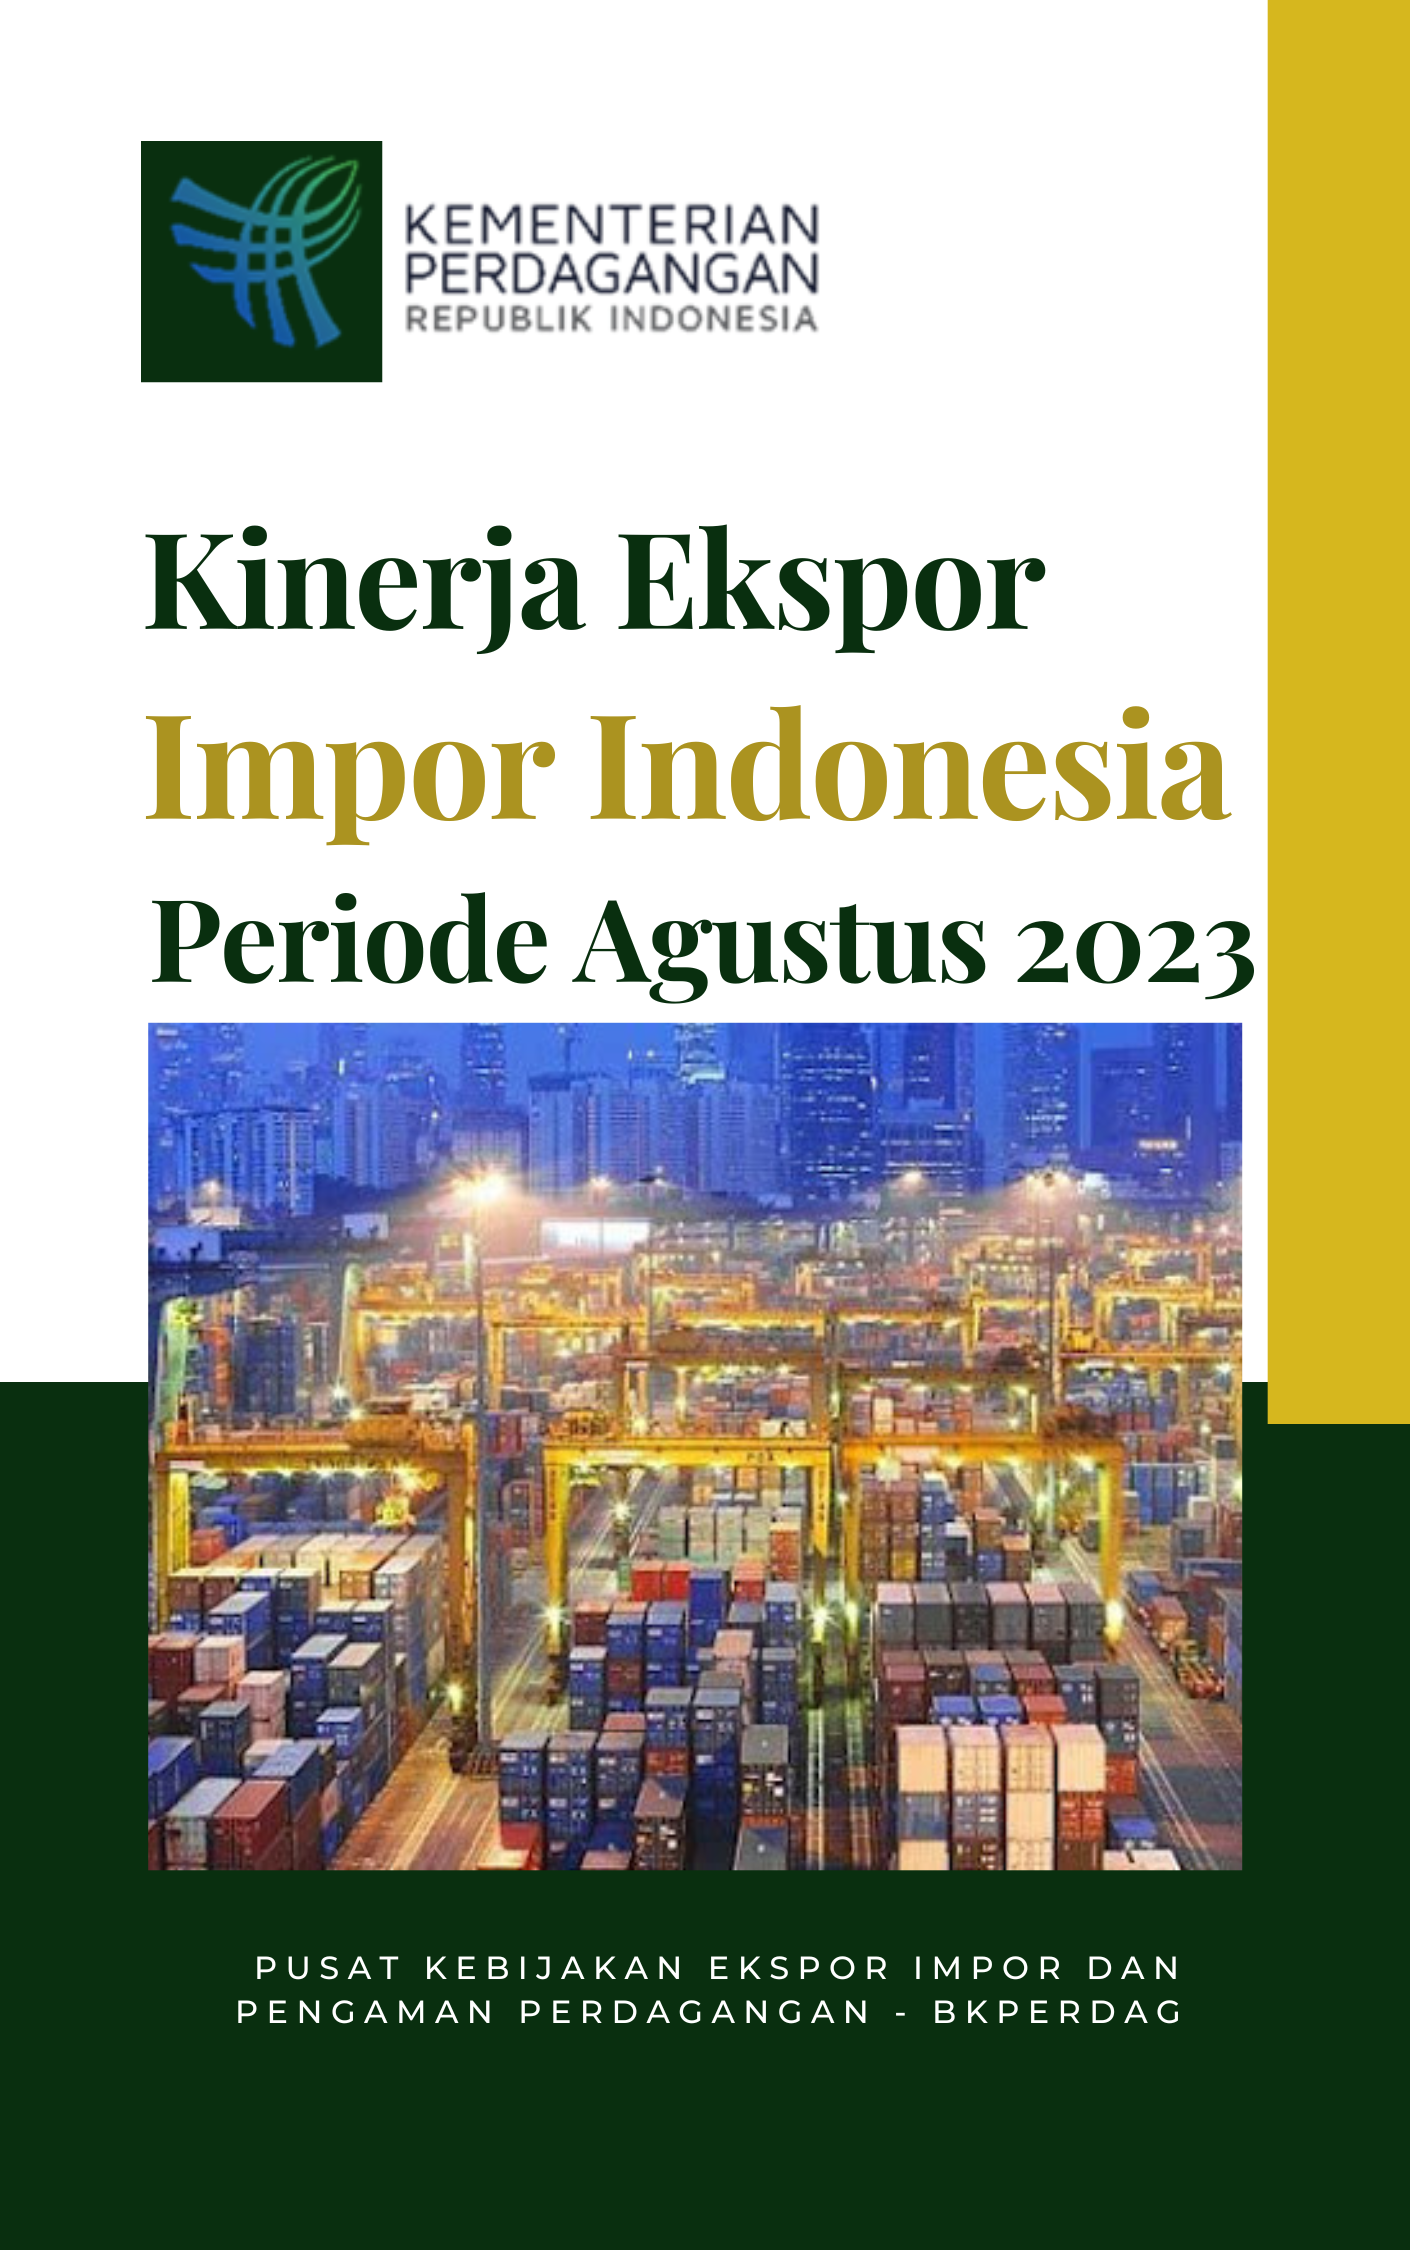 Kinerja Ekspor Impor Indonesia Periode Agustus Tahun 2023